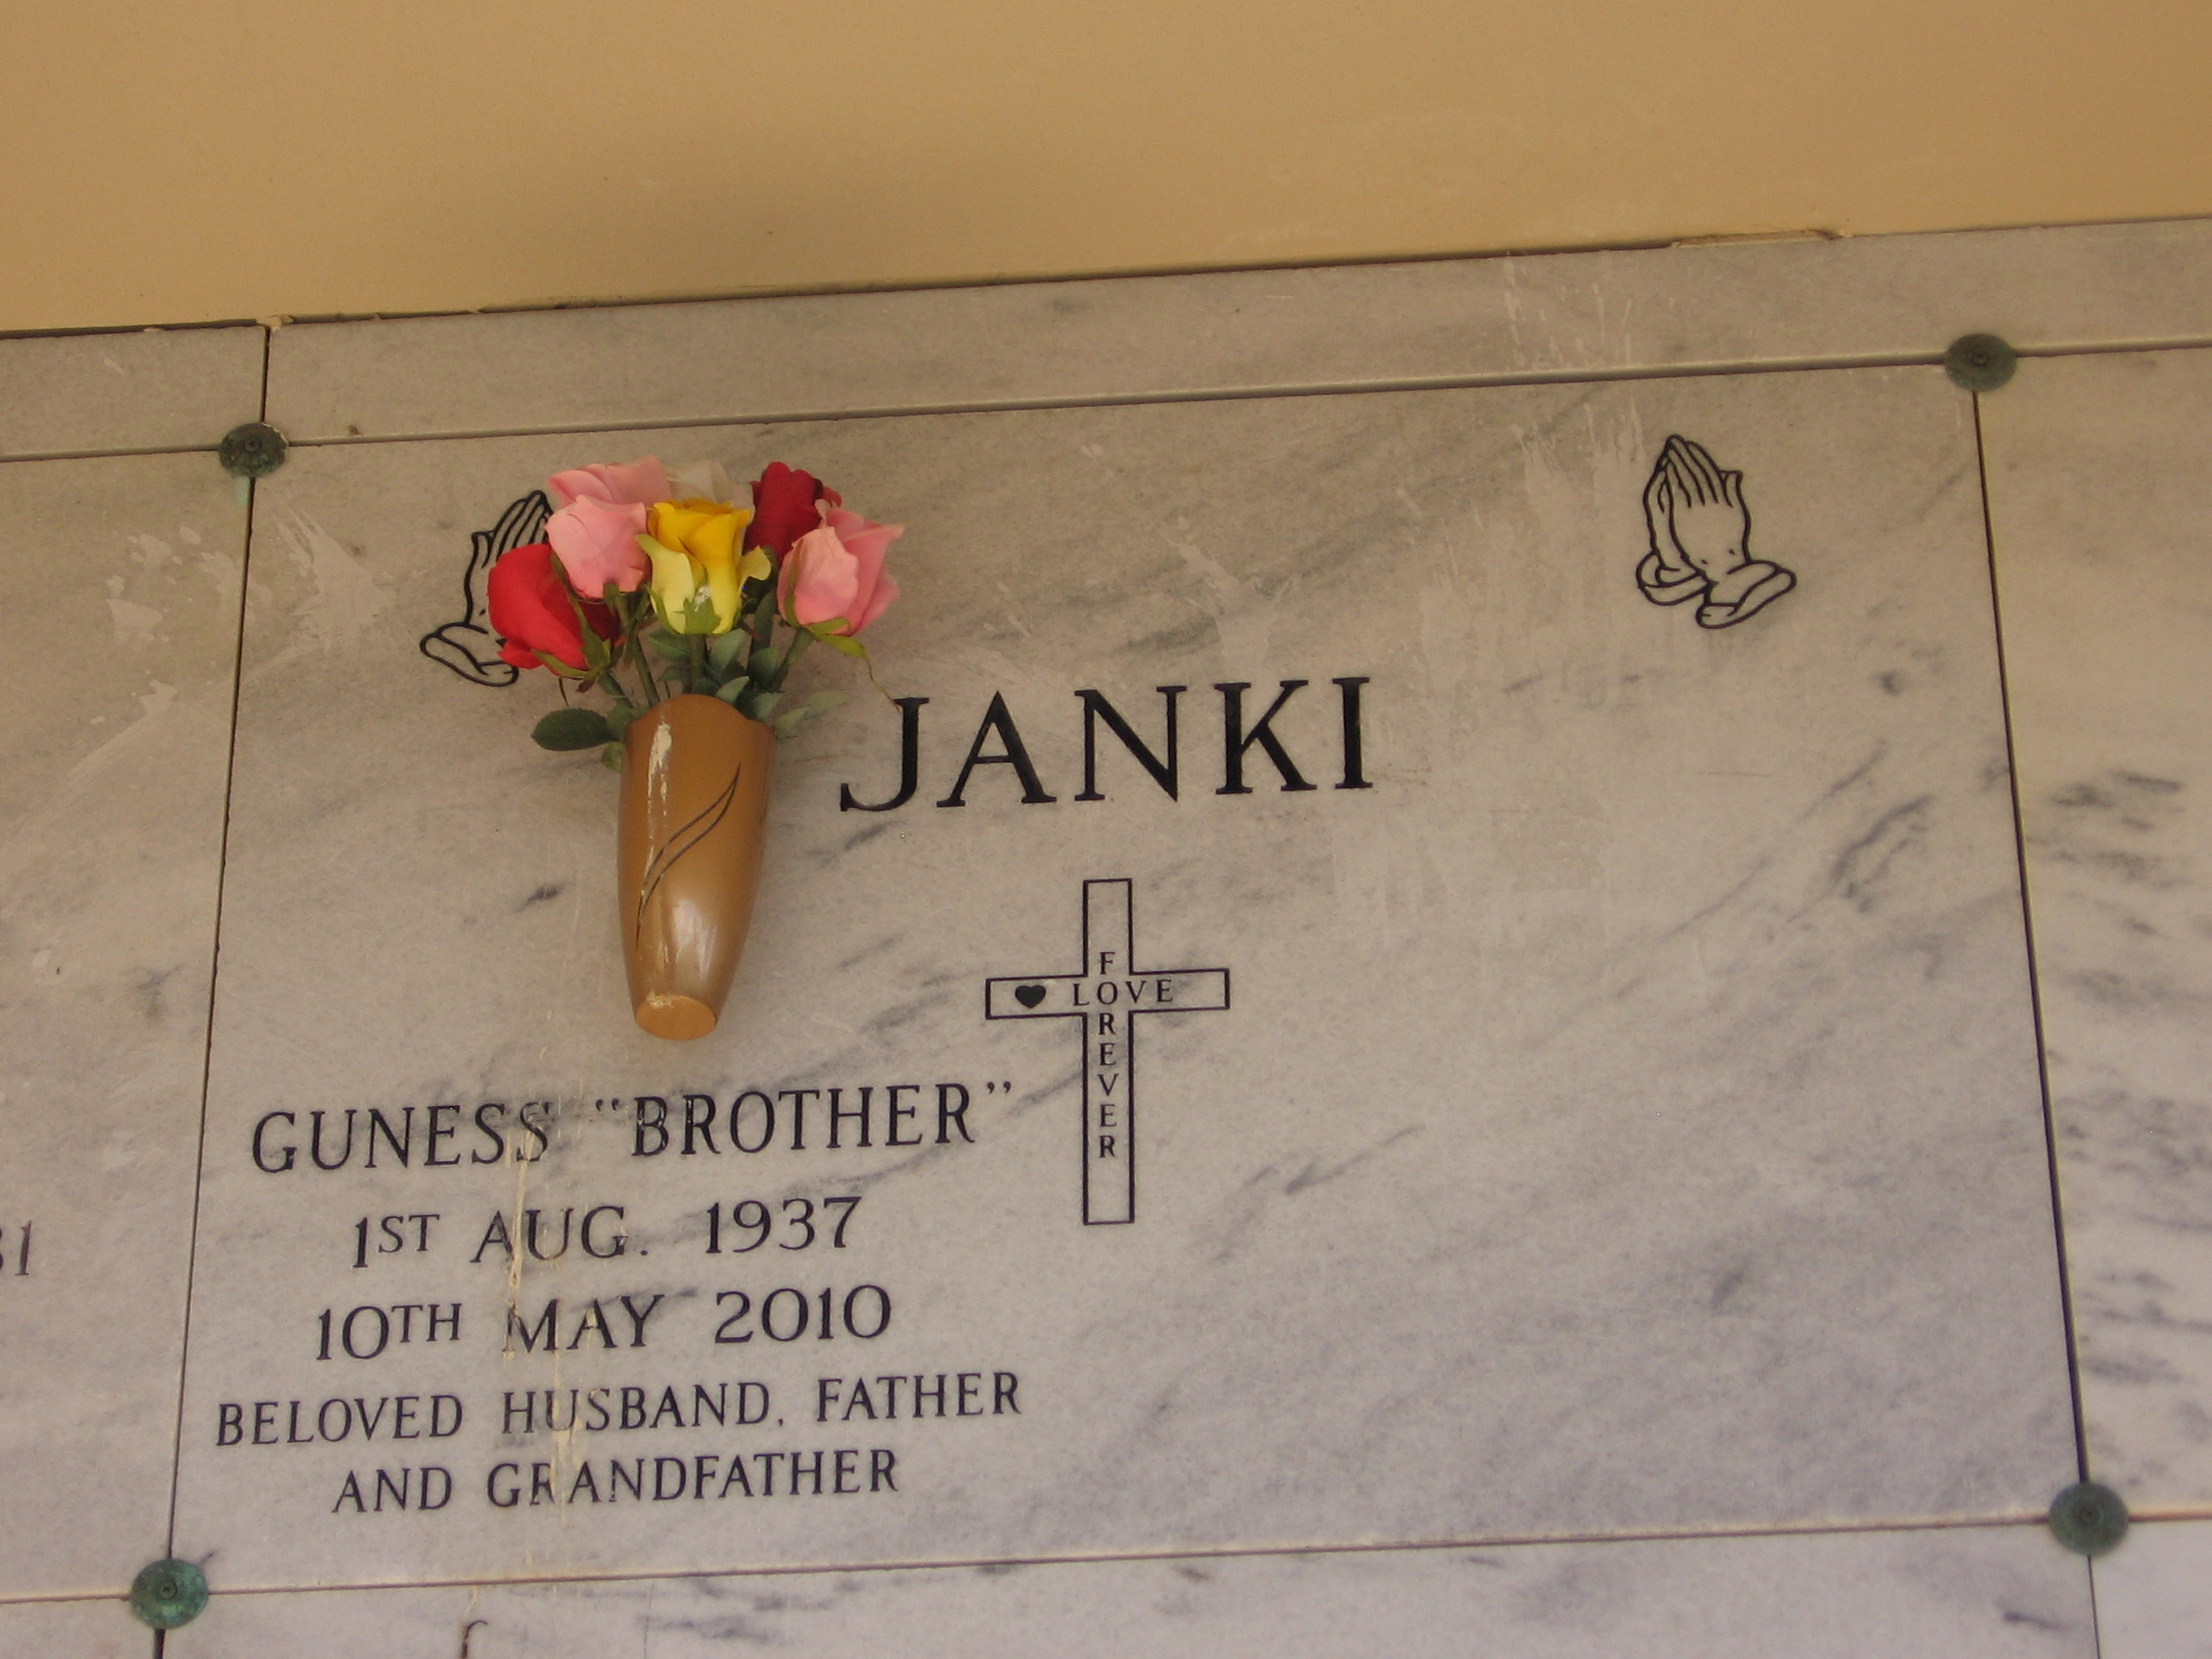 Guness "Brother" Janki